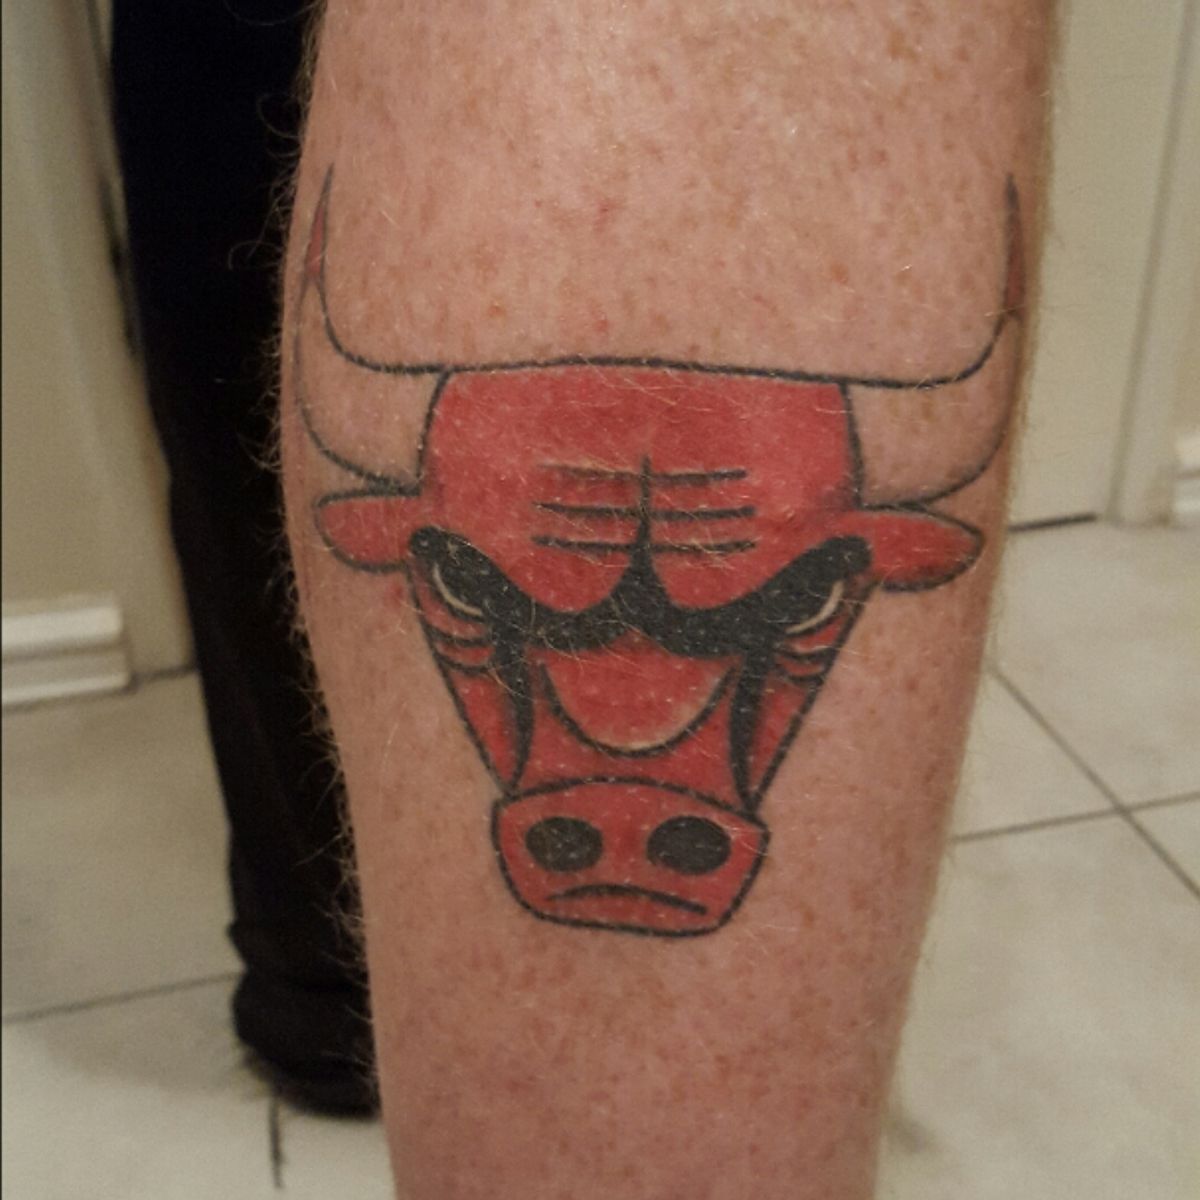 Tattoo uploaded by Matt Dalby • My Bull.. My favourite tatt.. Done by Ben  at Abandoned Art • Tattoodo